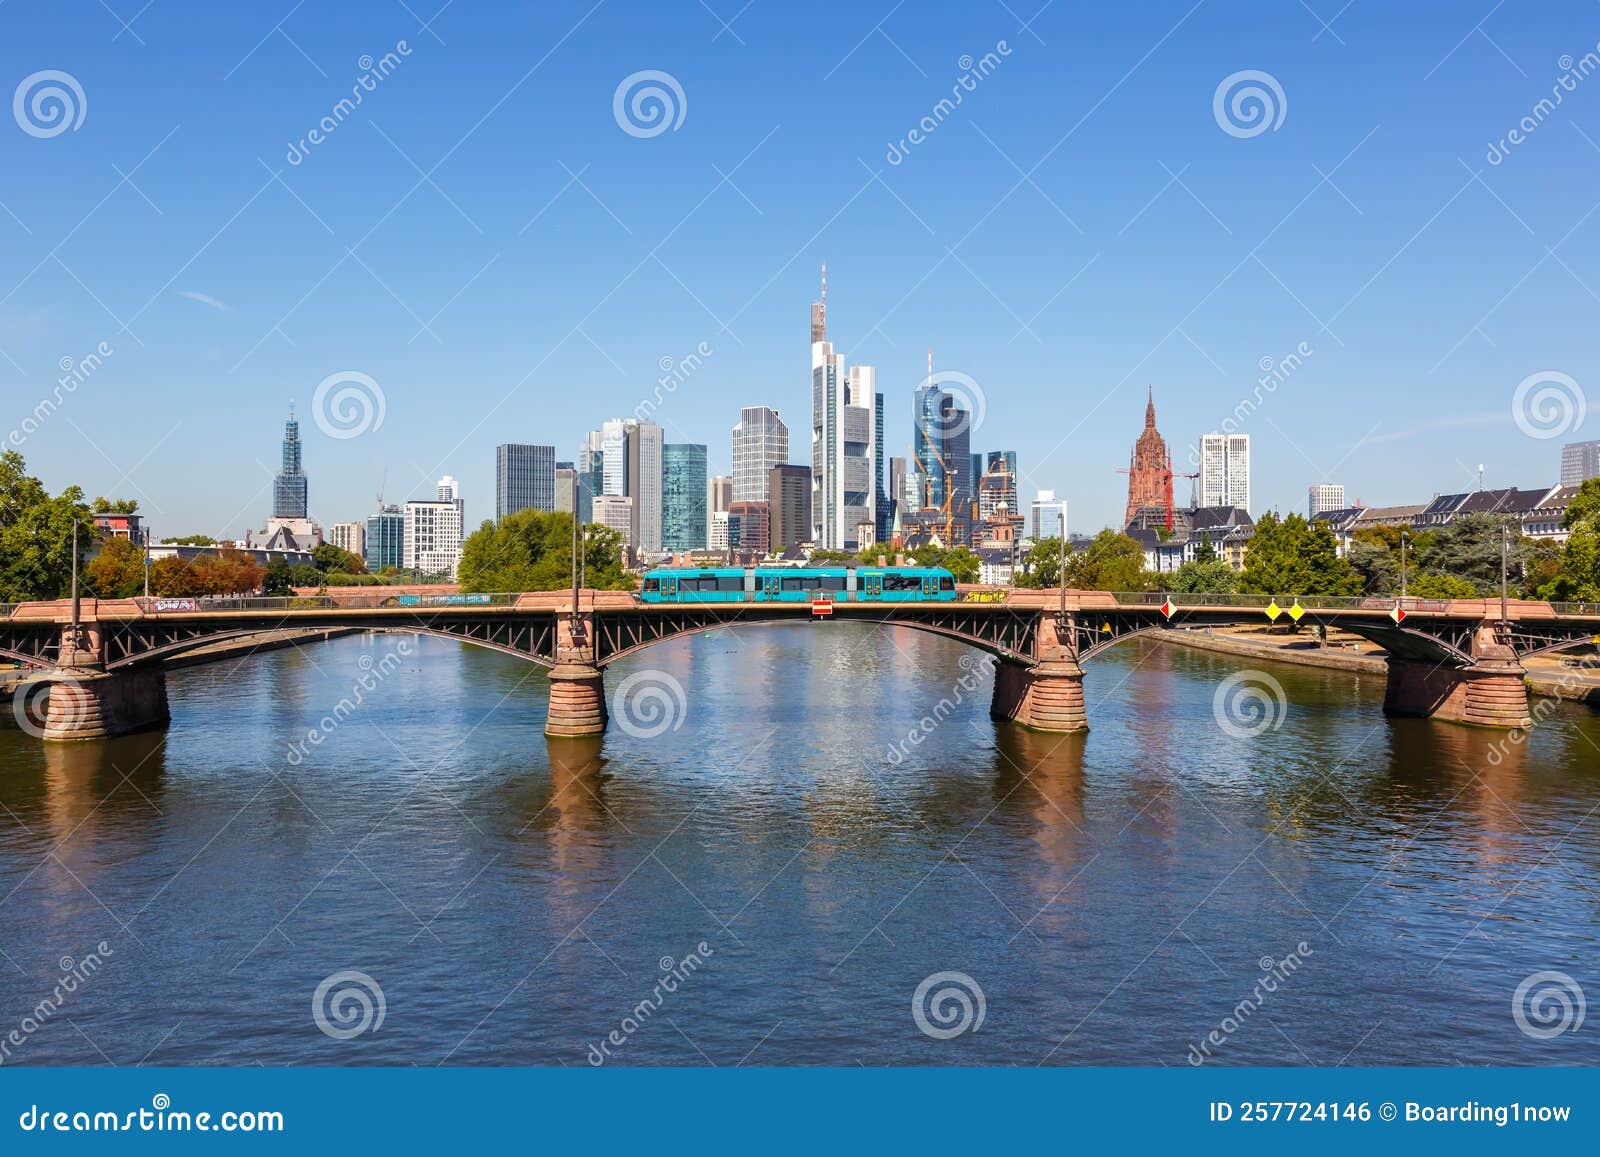 frankfurt skyline with main river and tram on ignatz bubis bridge travel traveling in germany